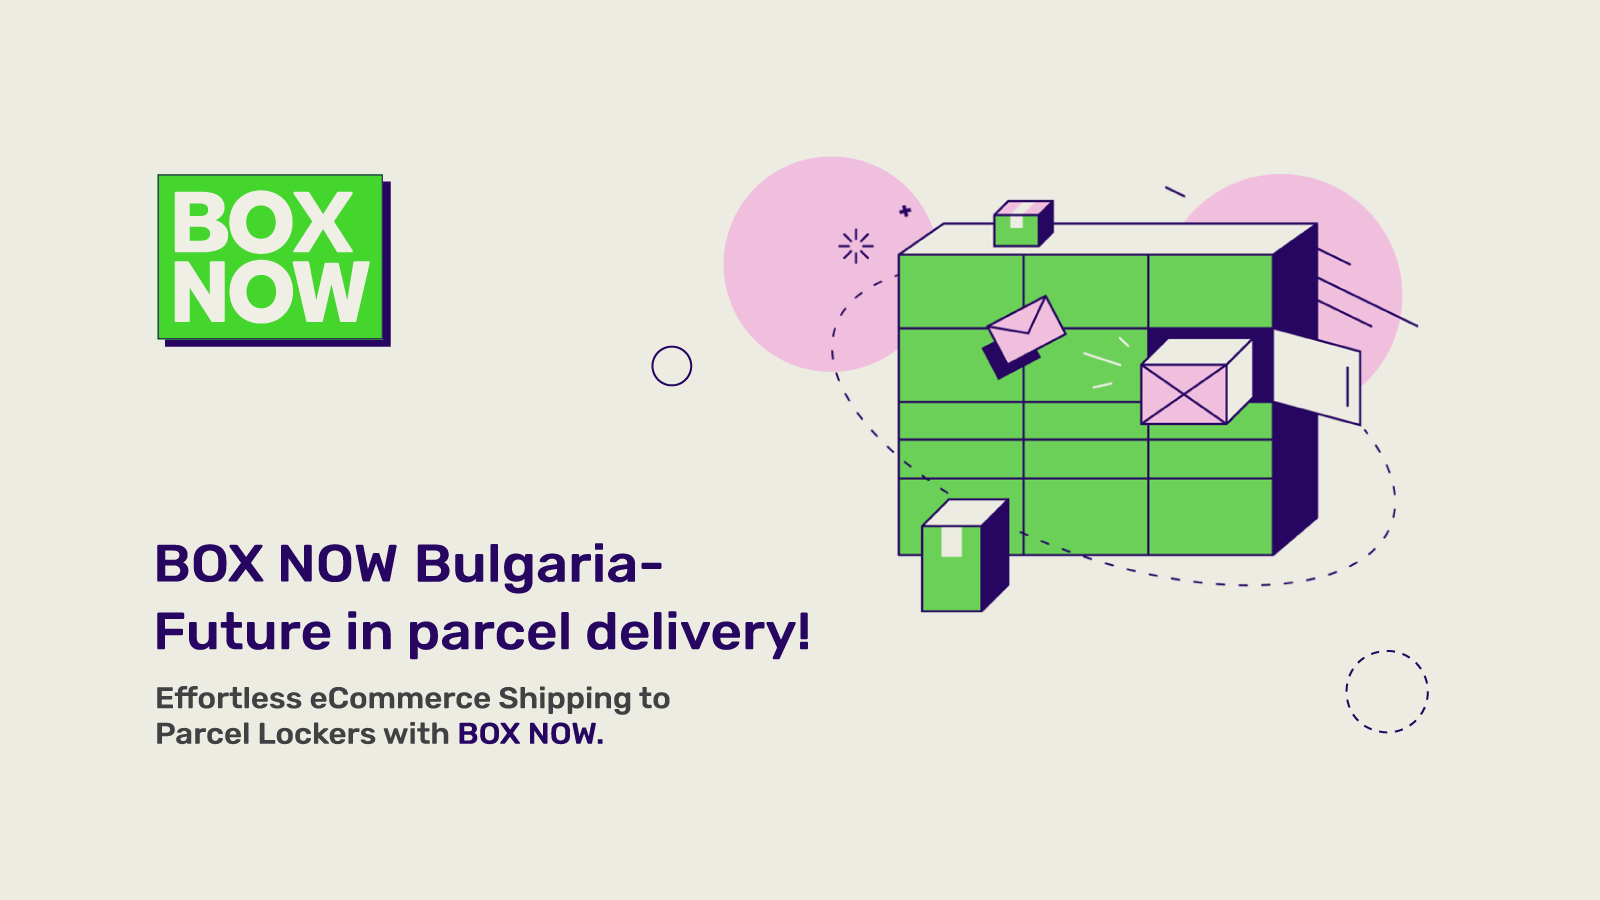 BOX NOW Bulgaria - Framtiden inom paketleverans!